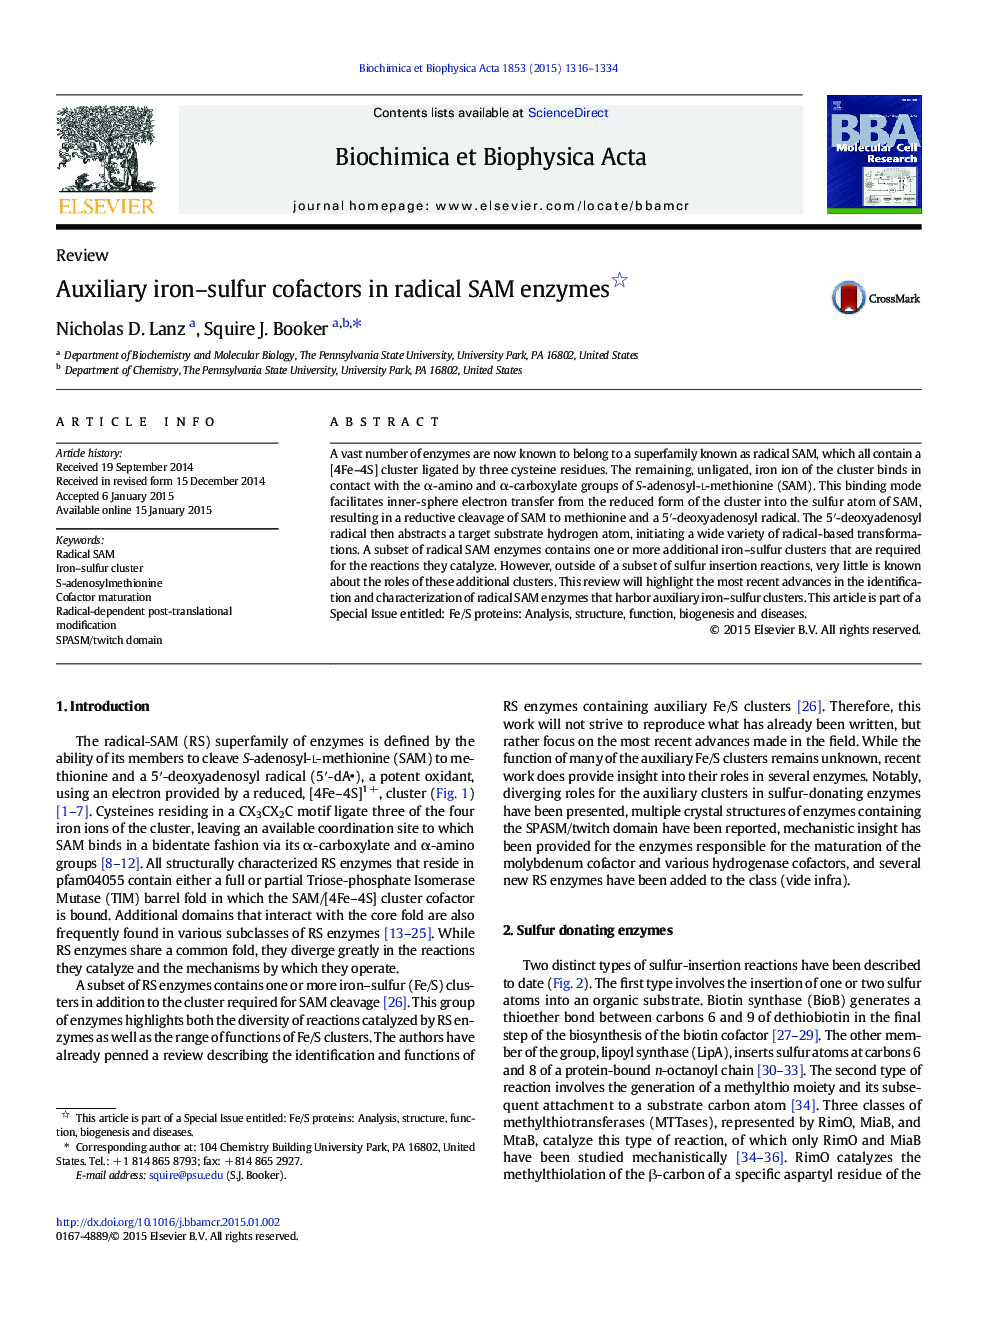 Auxiliary iron-sulfur cofactors in radical SAM enzymes